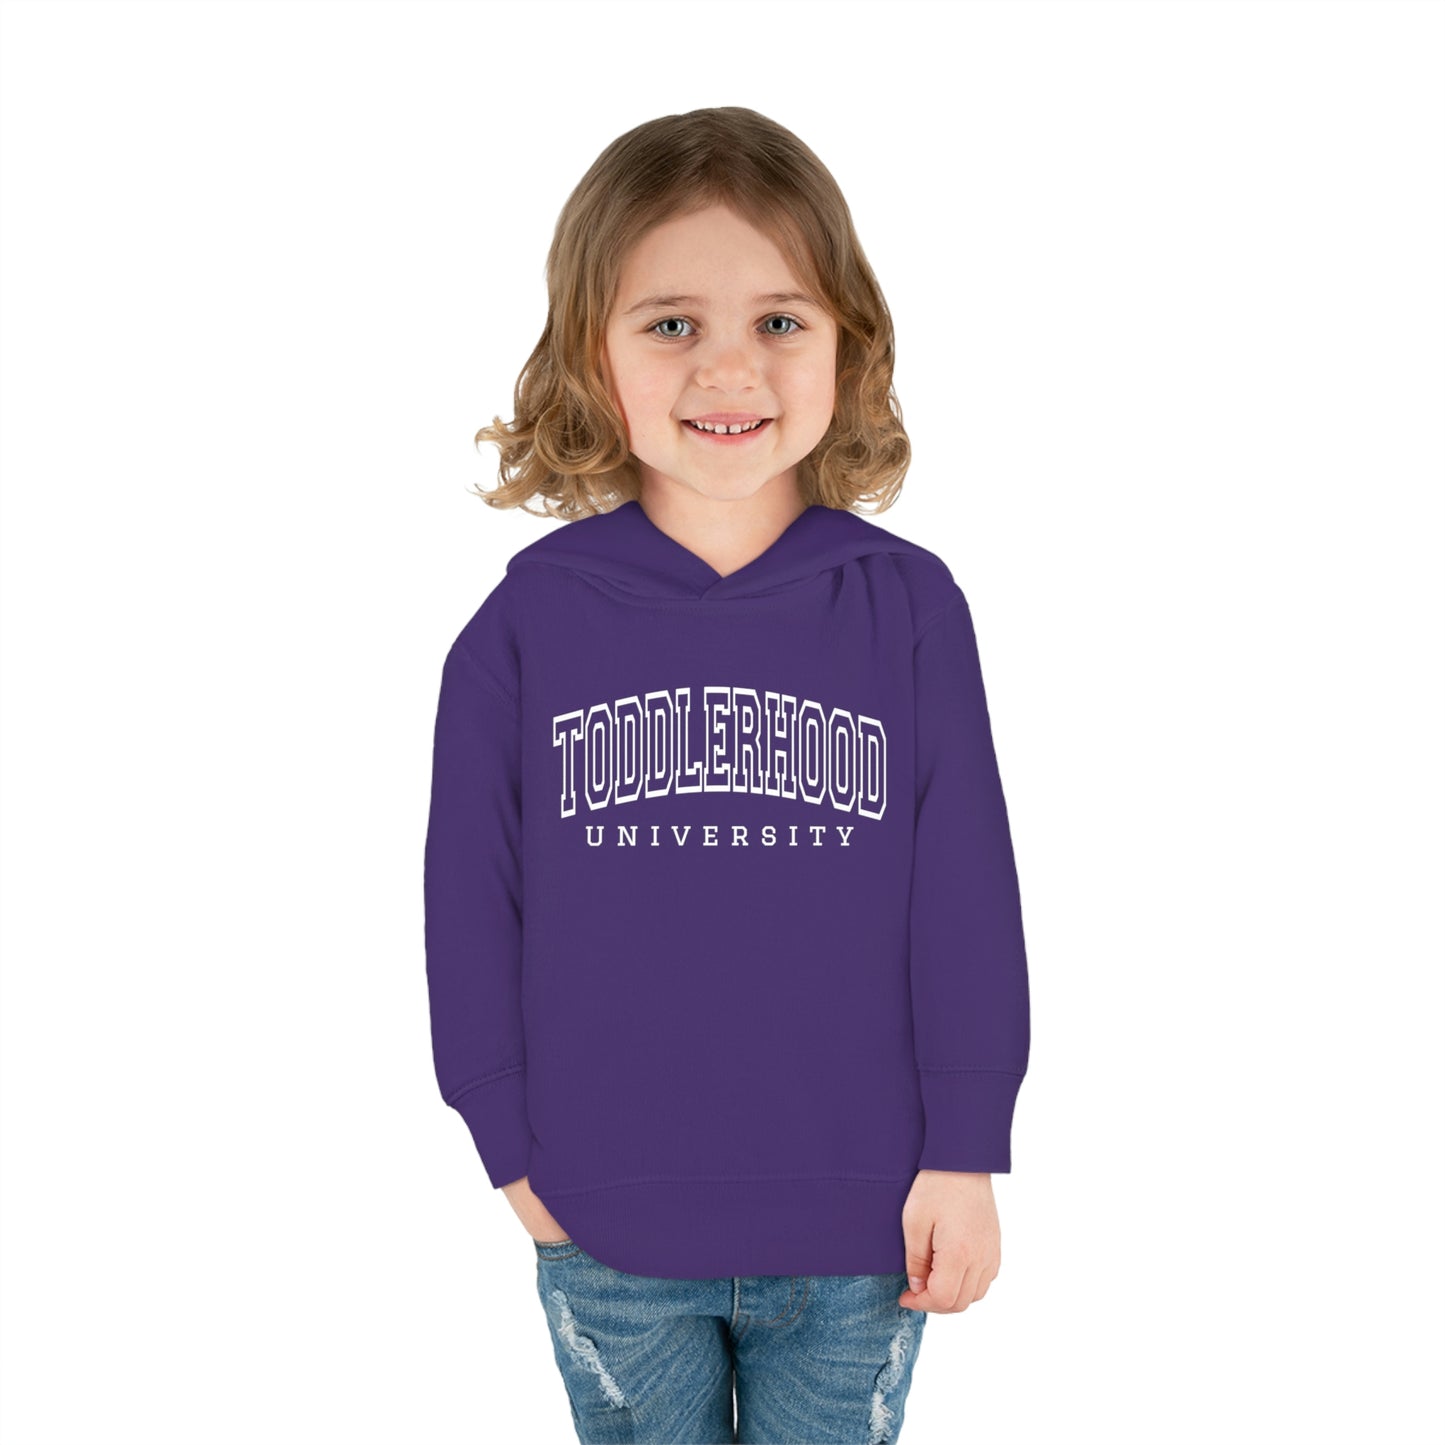 "Toddlerhood University" Toddler Pullover Fleece Hoodie (2T-6T)